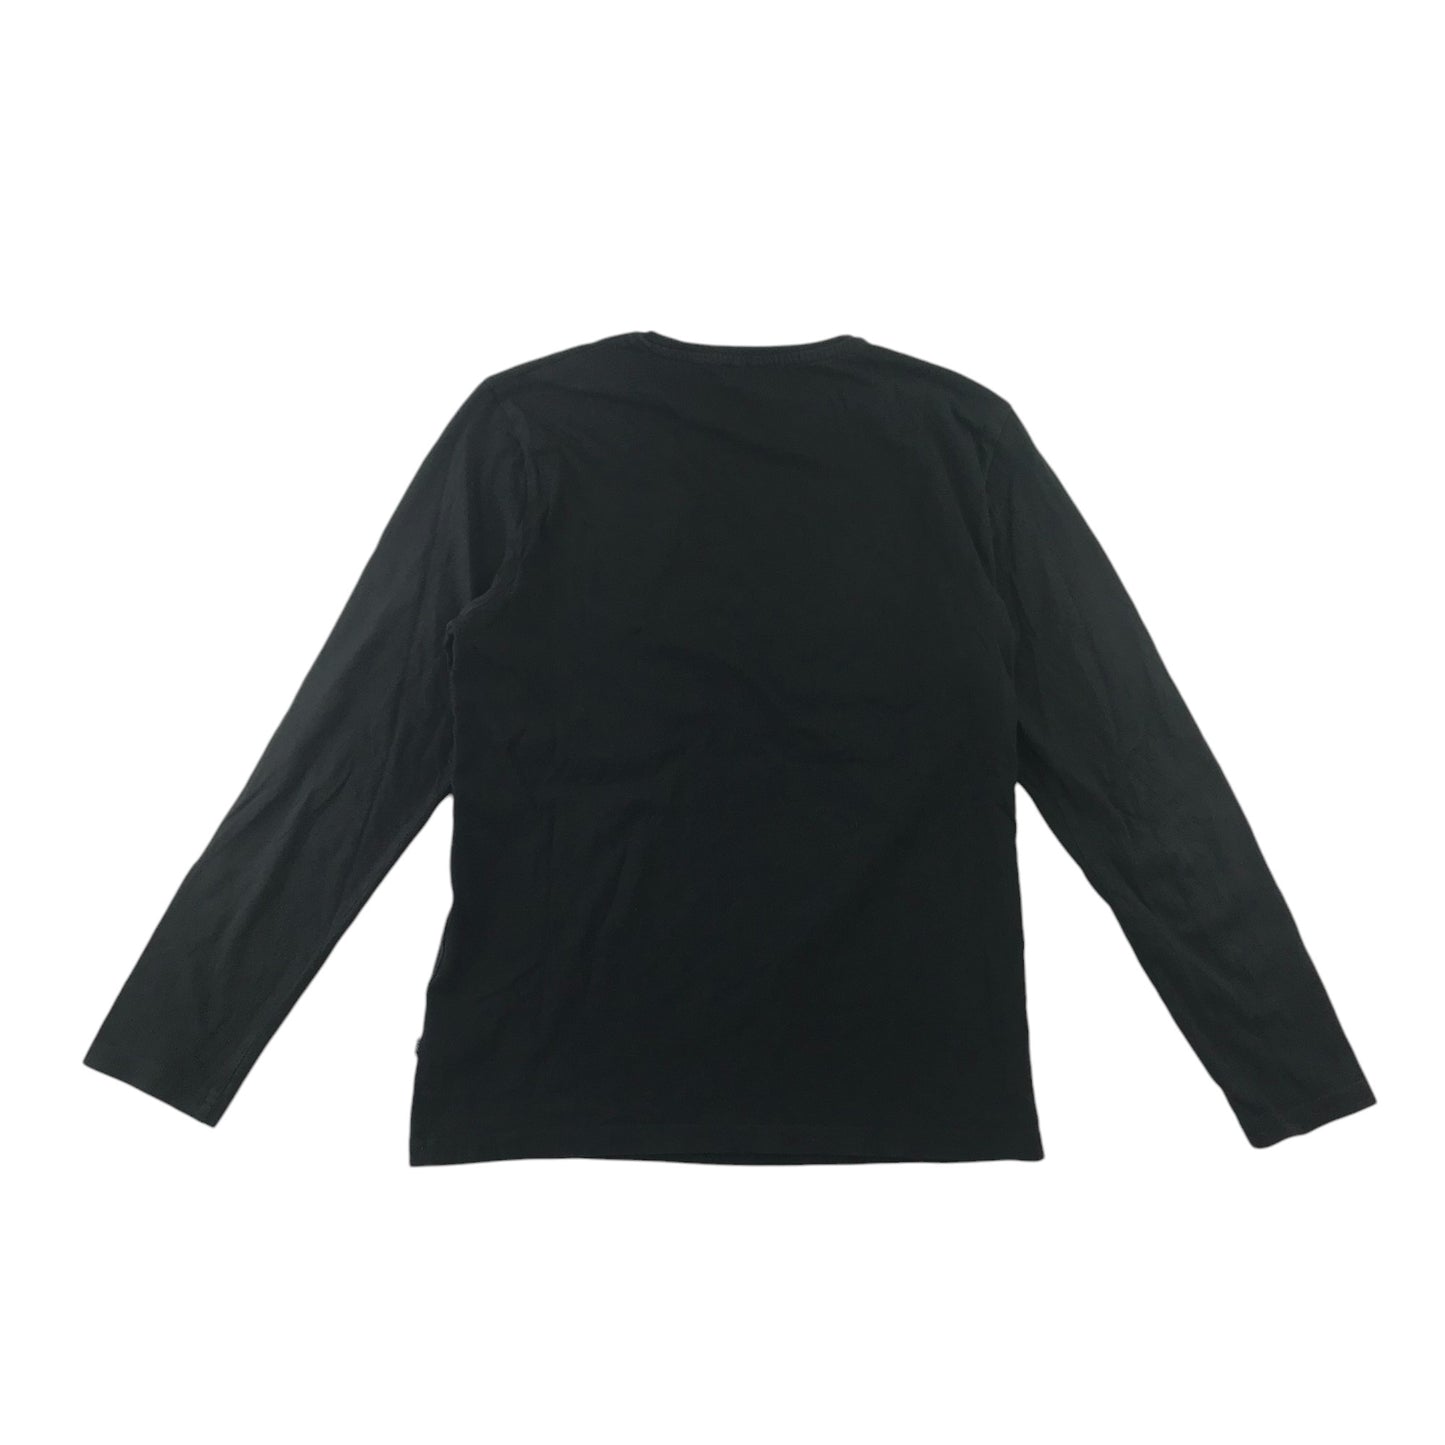 HUGO BOSS T-shirt Age 14 Black Long Sleeve Plain with Logo Cotton